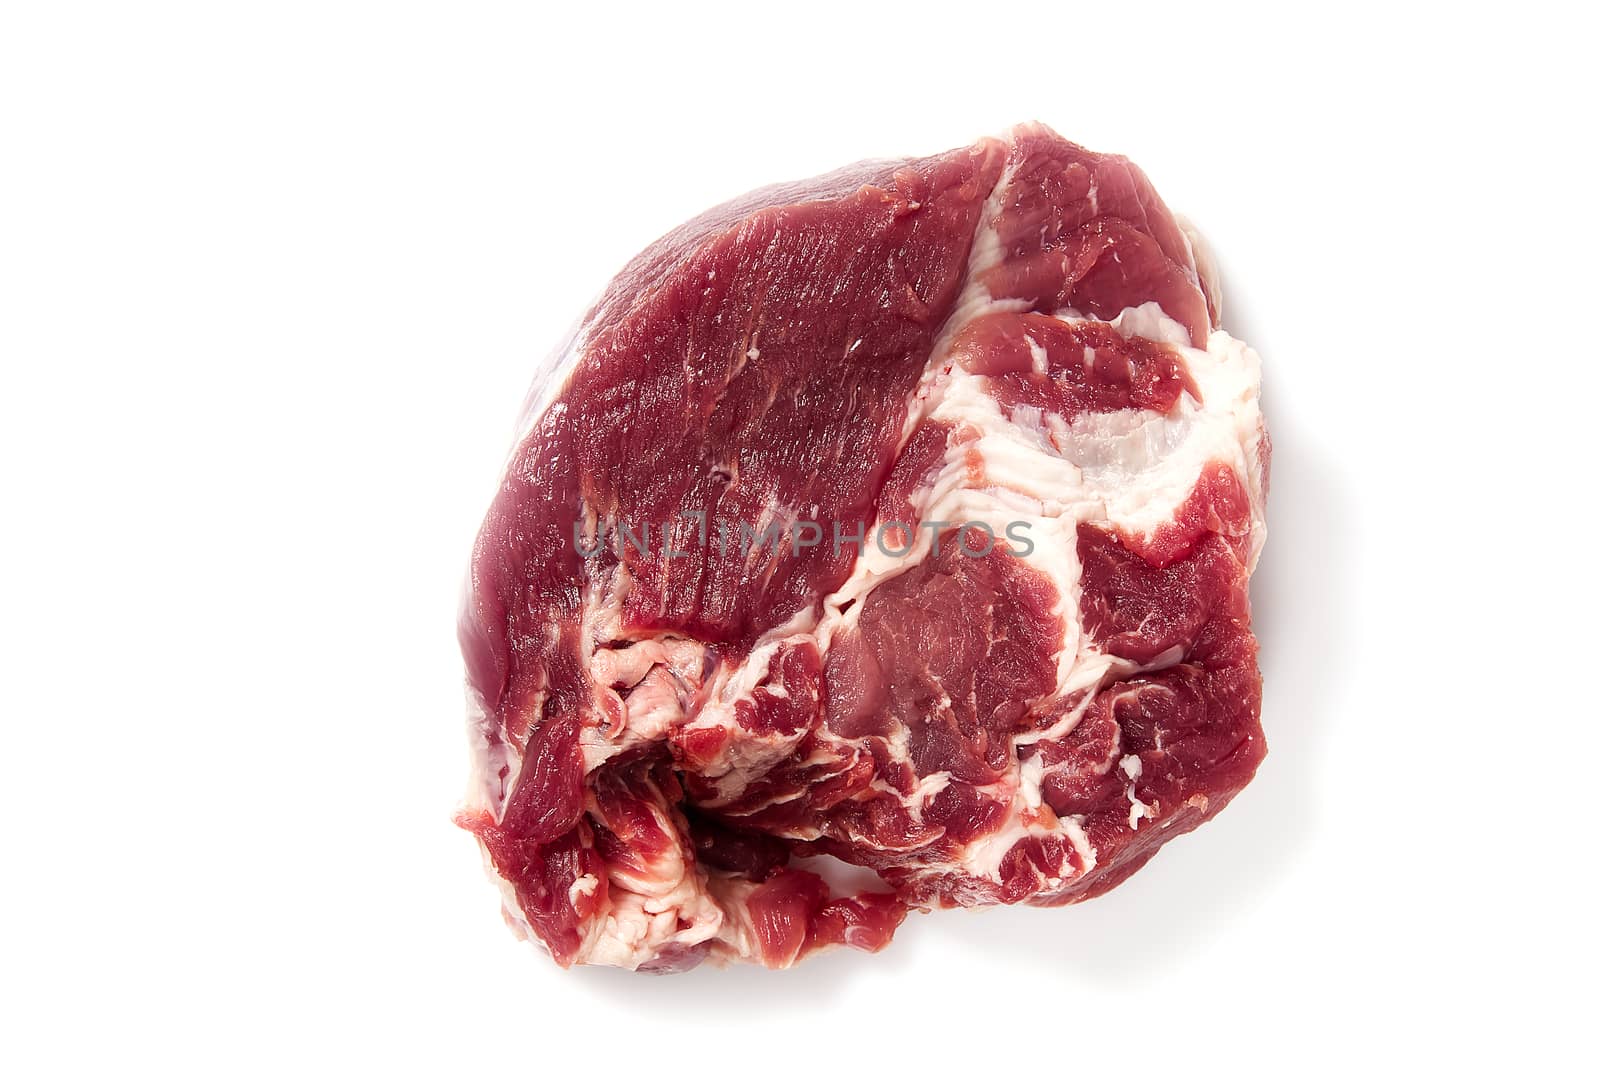 single fresh raw pork steak on white background. by PhotoTime